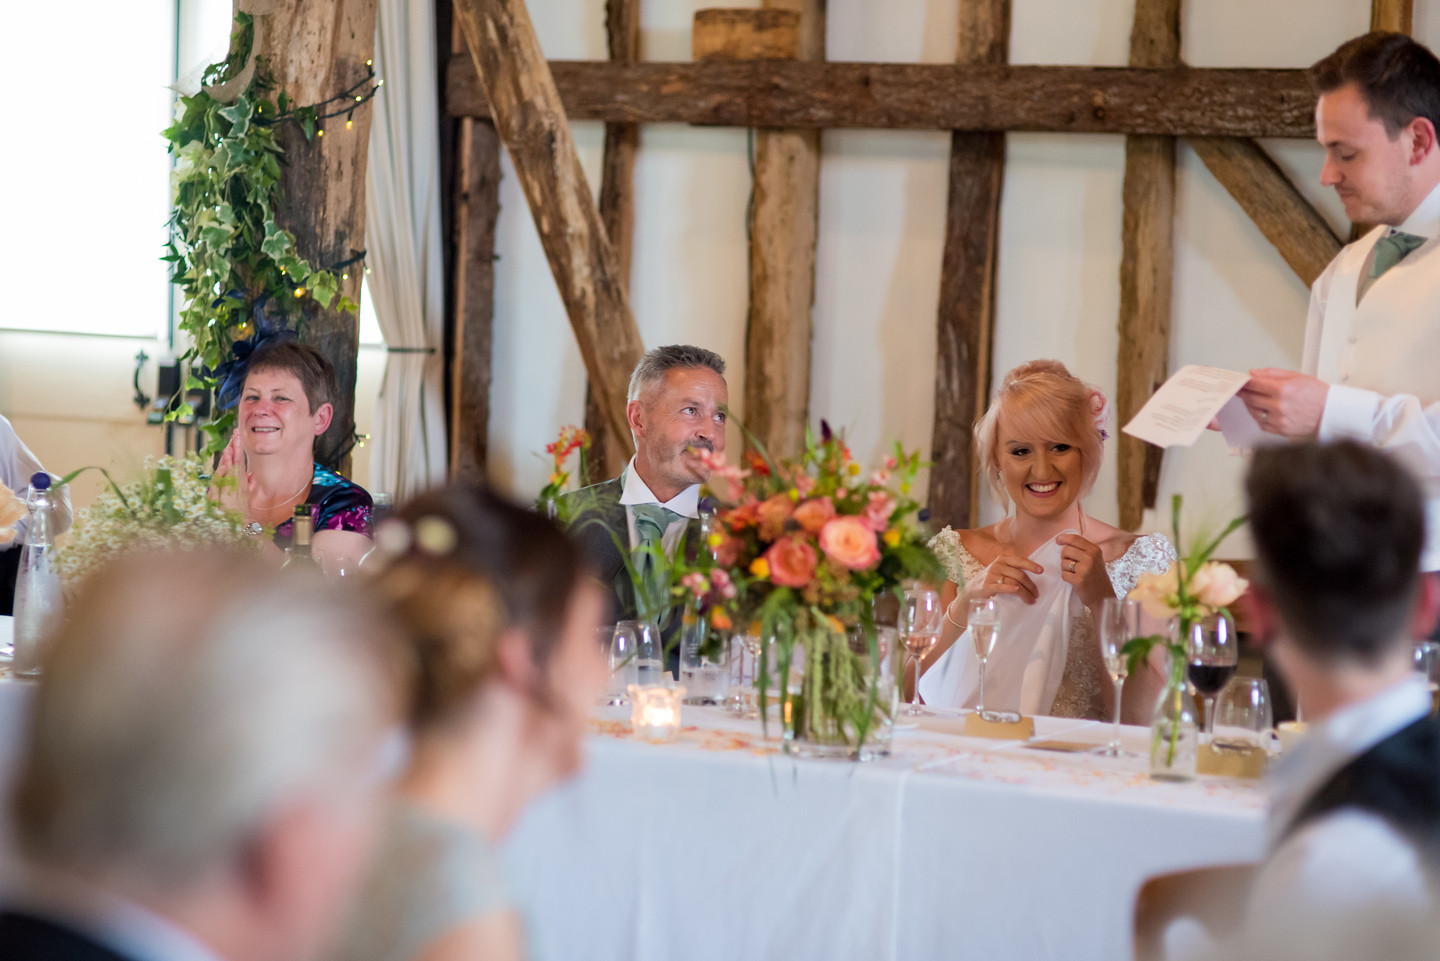 clock barn real wedding, clock barn wedding, barn wedding, rustic wedding, wedding inspiration, hampshire wedding venue